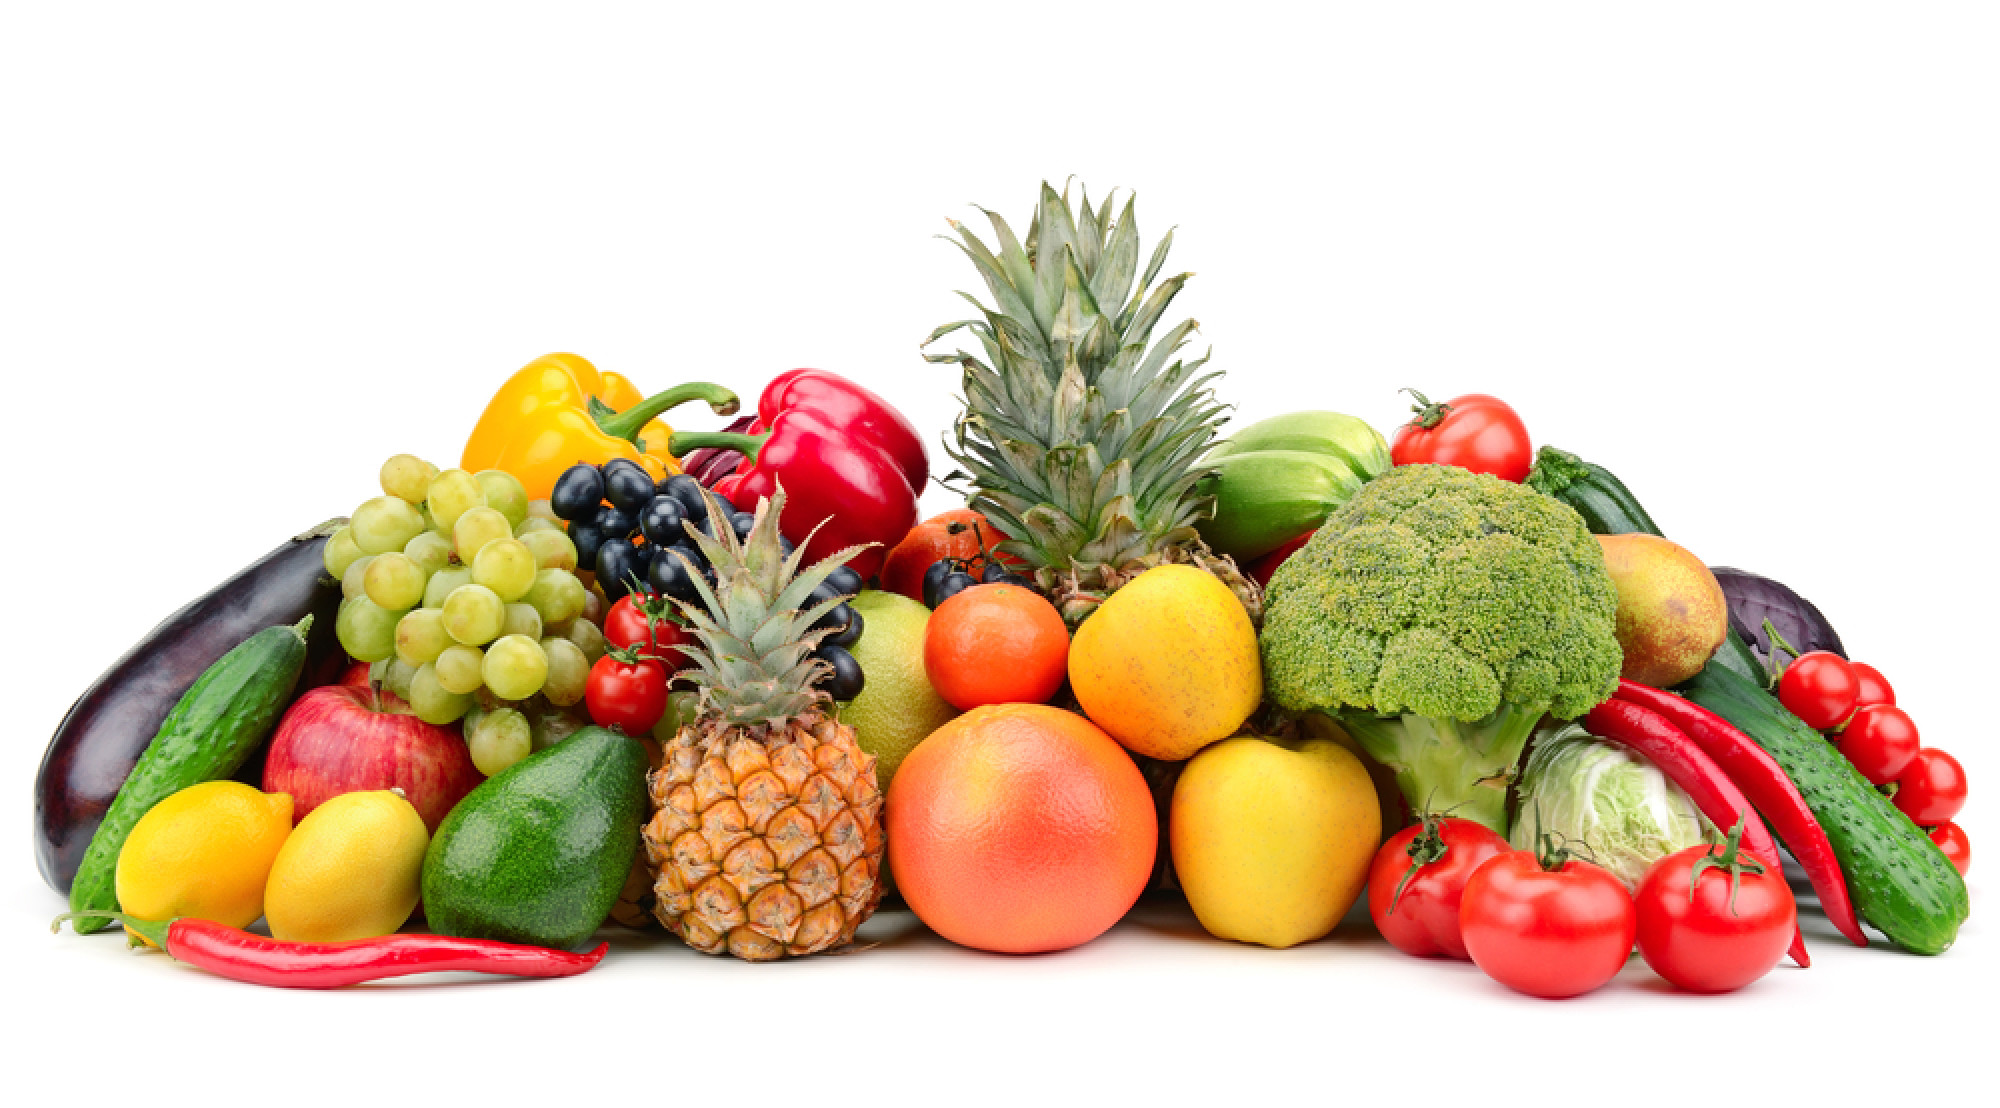 High Resolution Wallpaper | Fruits & Vegetables 2000x1108 px